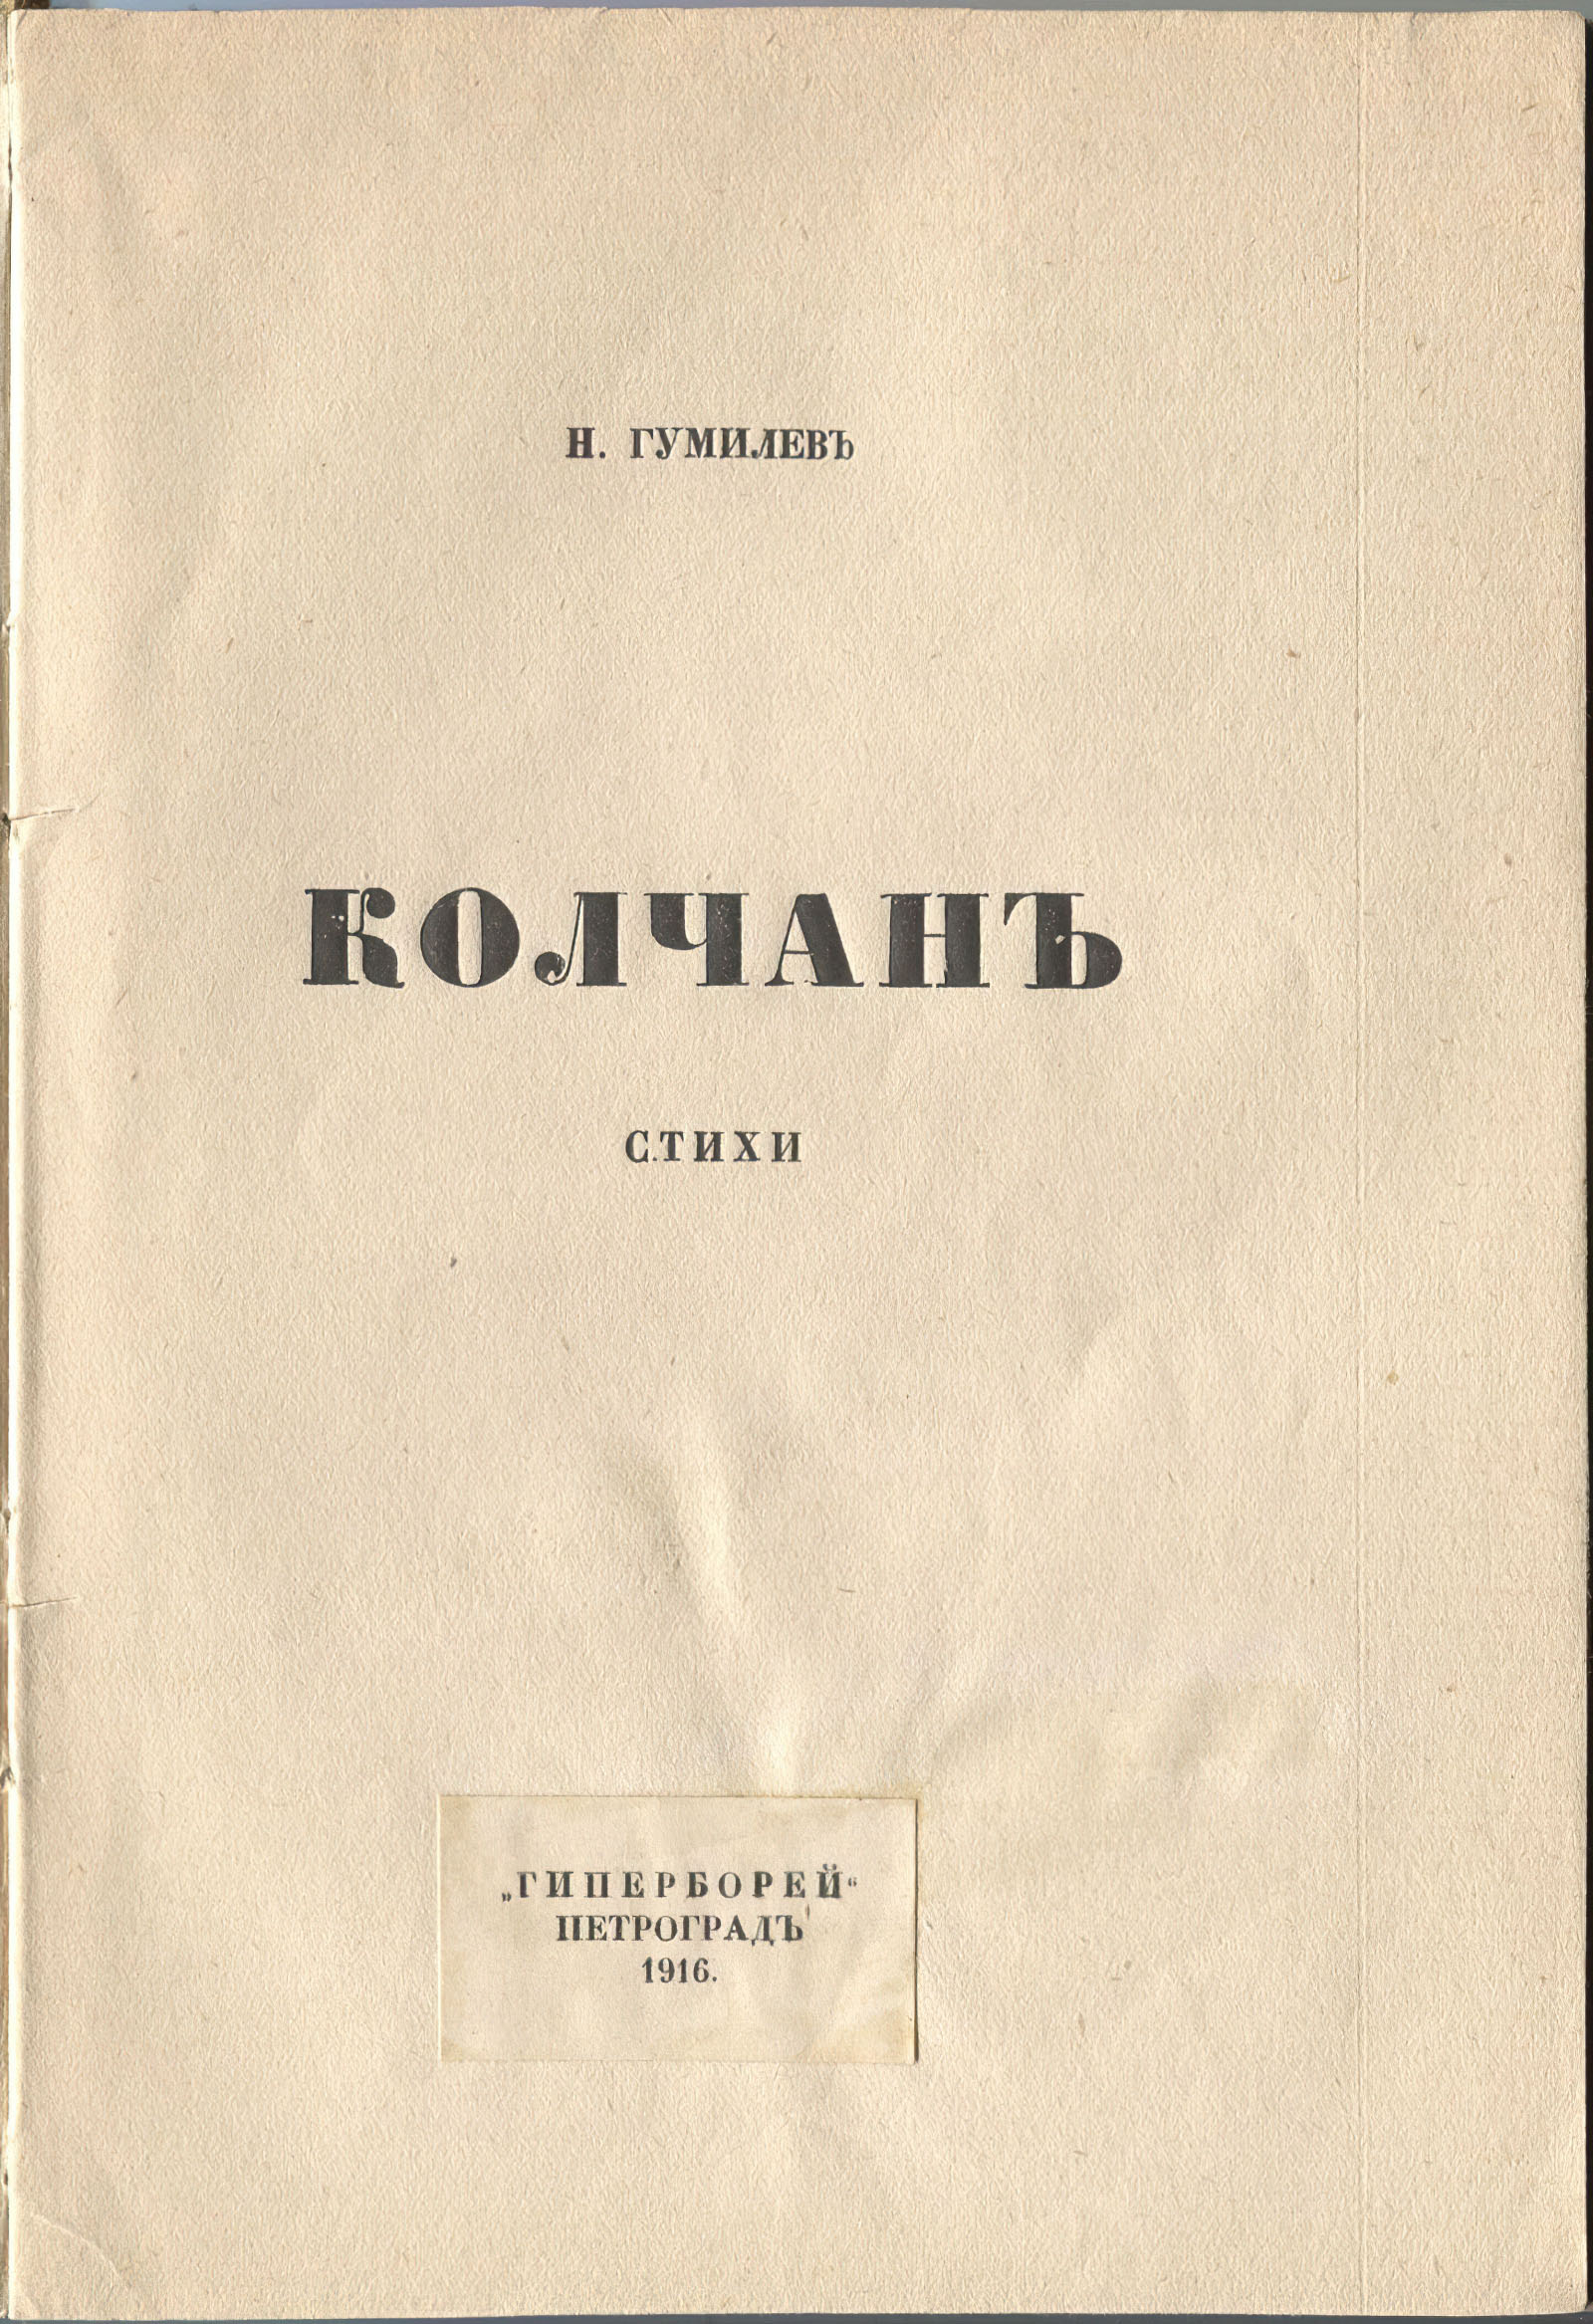 Колчан (1916). Титульный лист 2